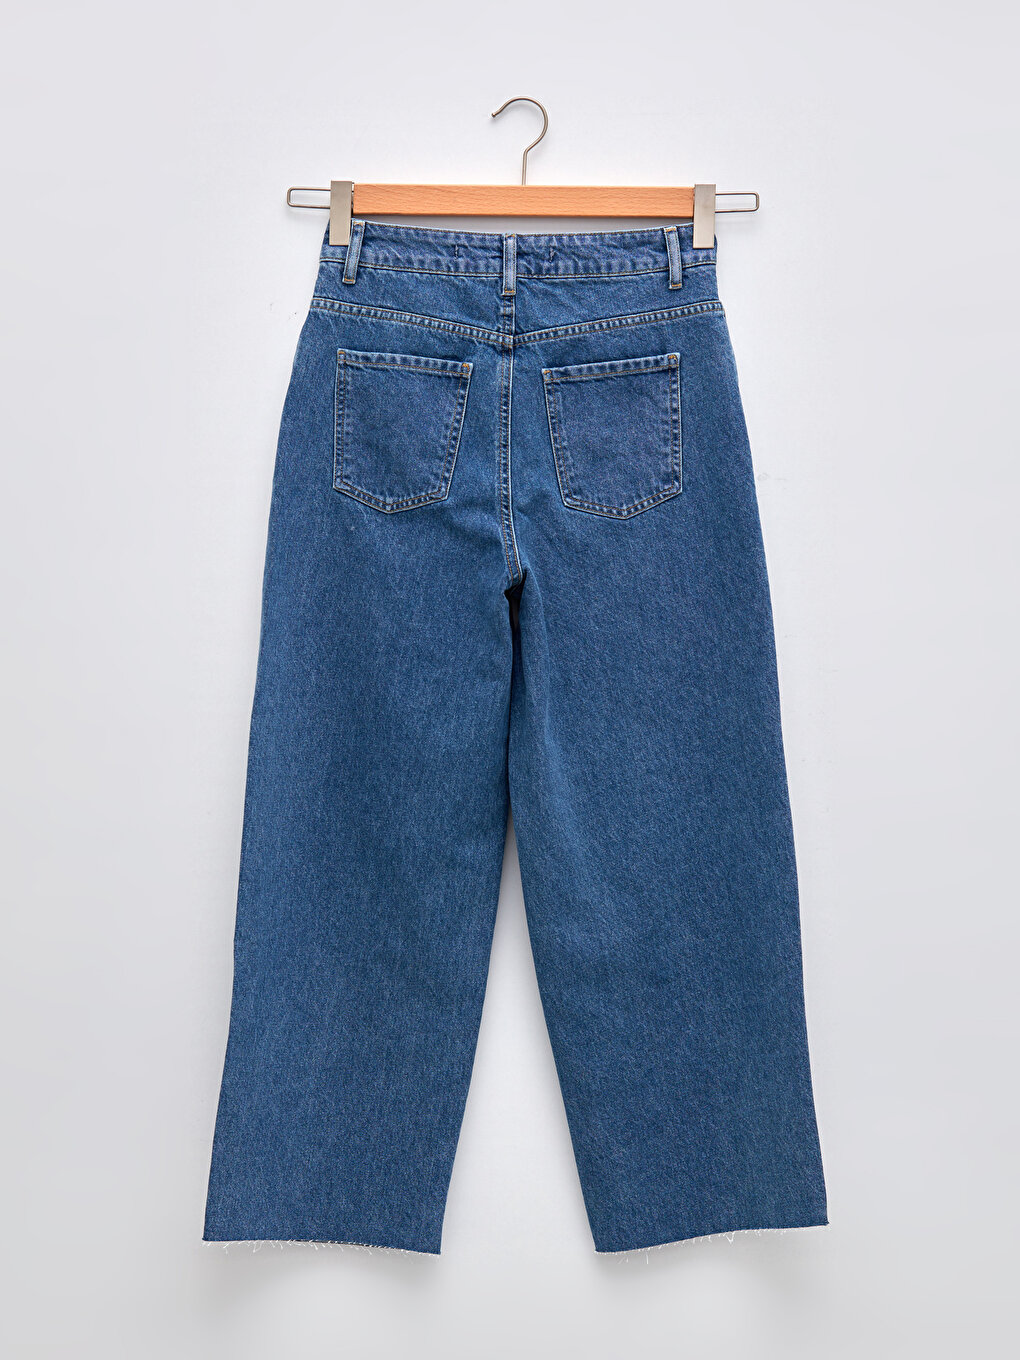 Standard Fit Pocket Detailed Women's Rodeo Jeans -S29126Z8-H45 ...